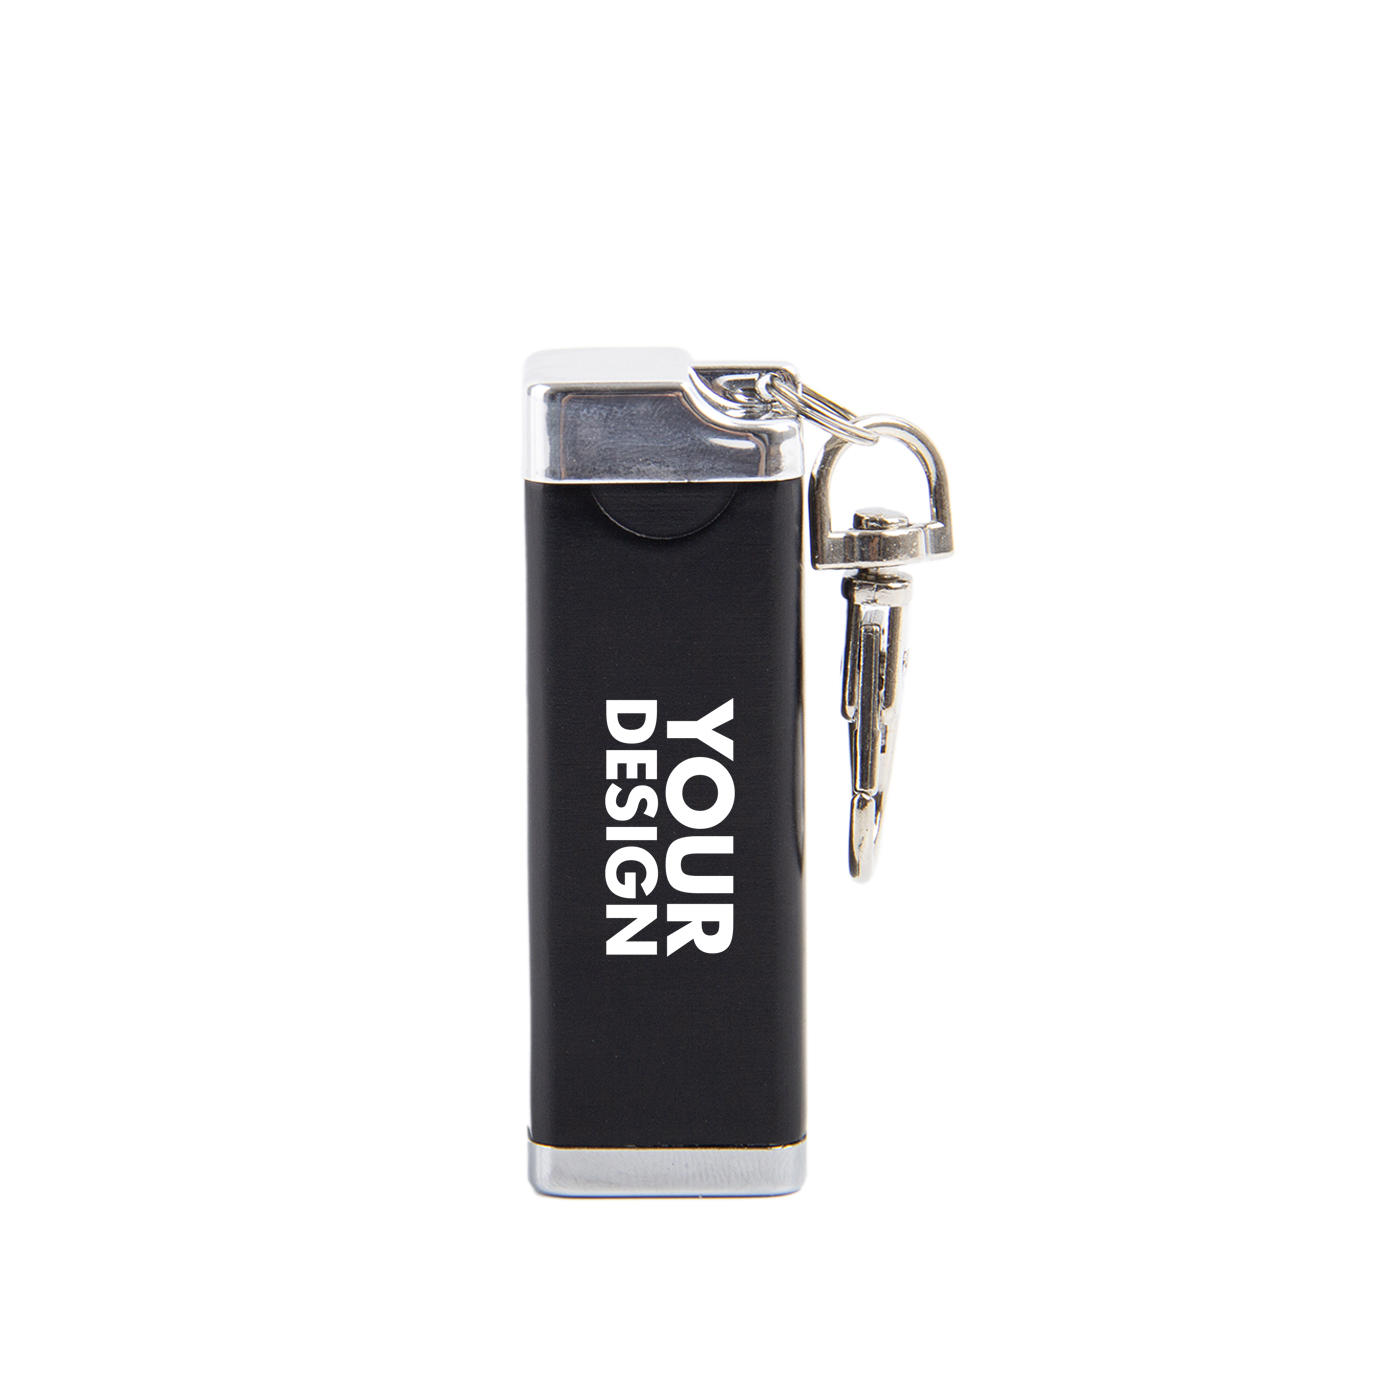 Cylinder Portable Pocket Ashtray With Keychain2